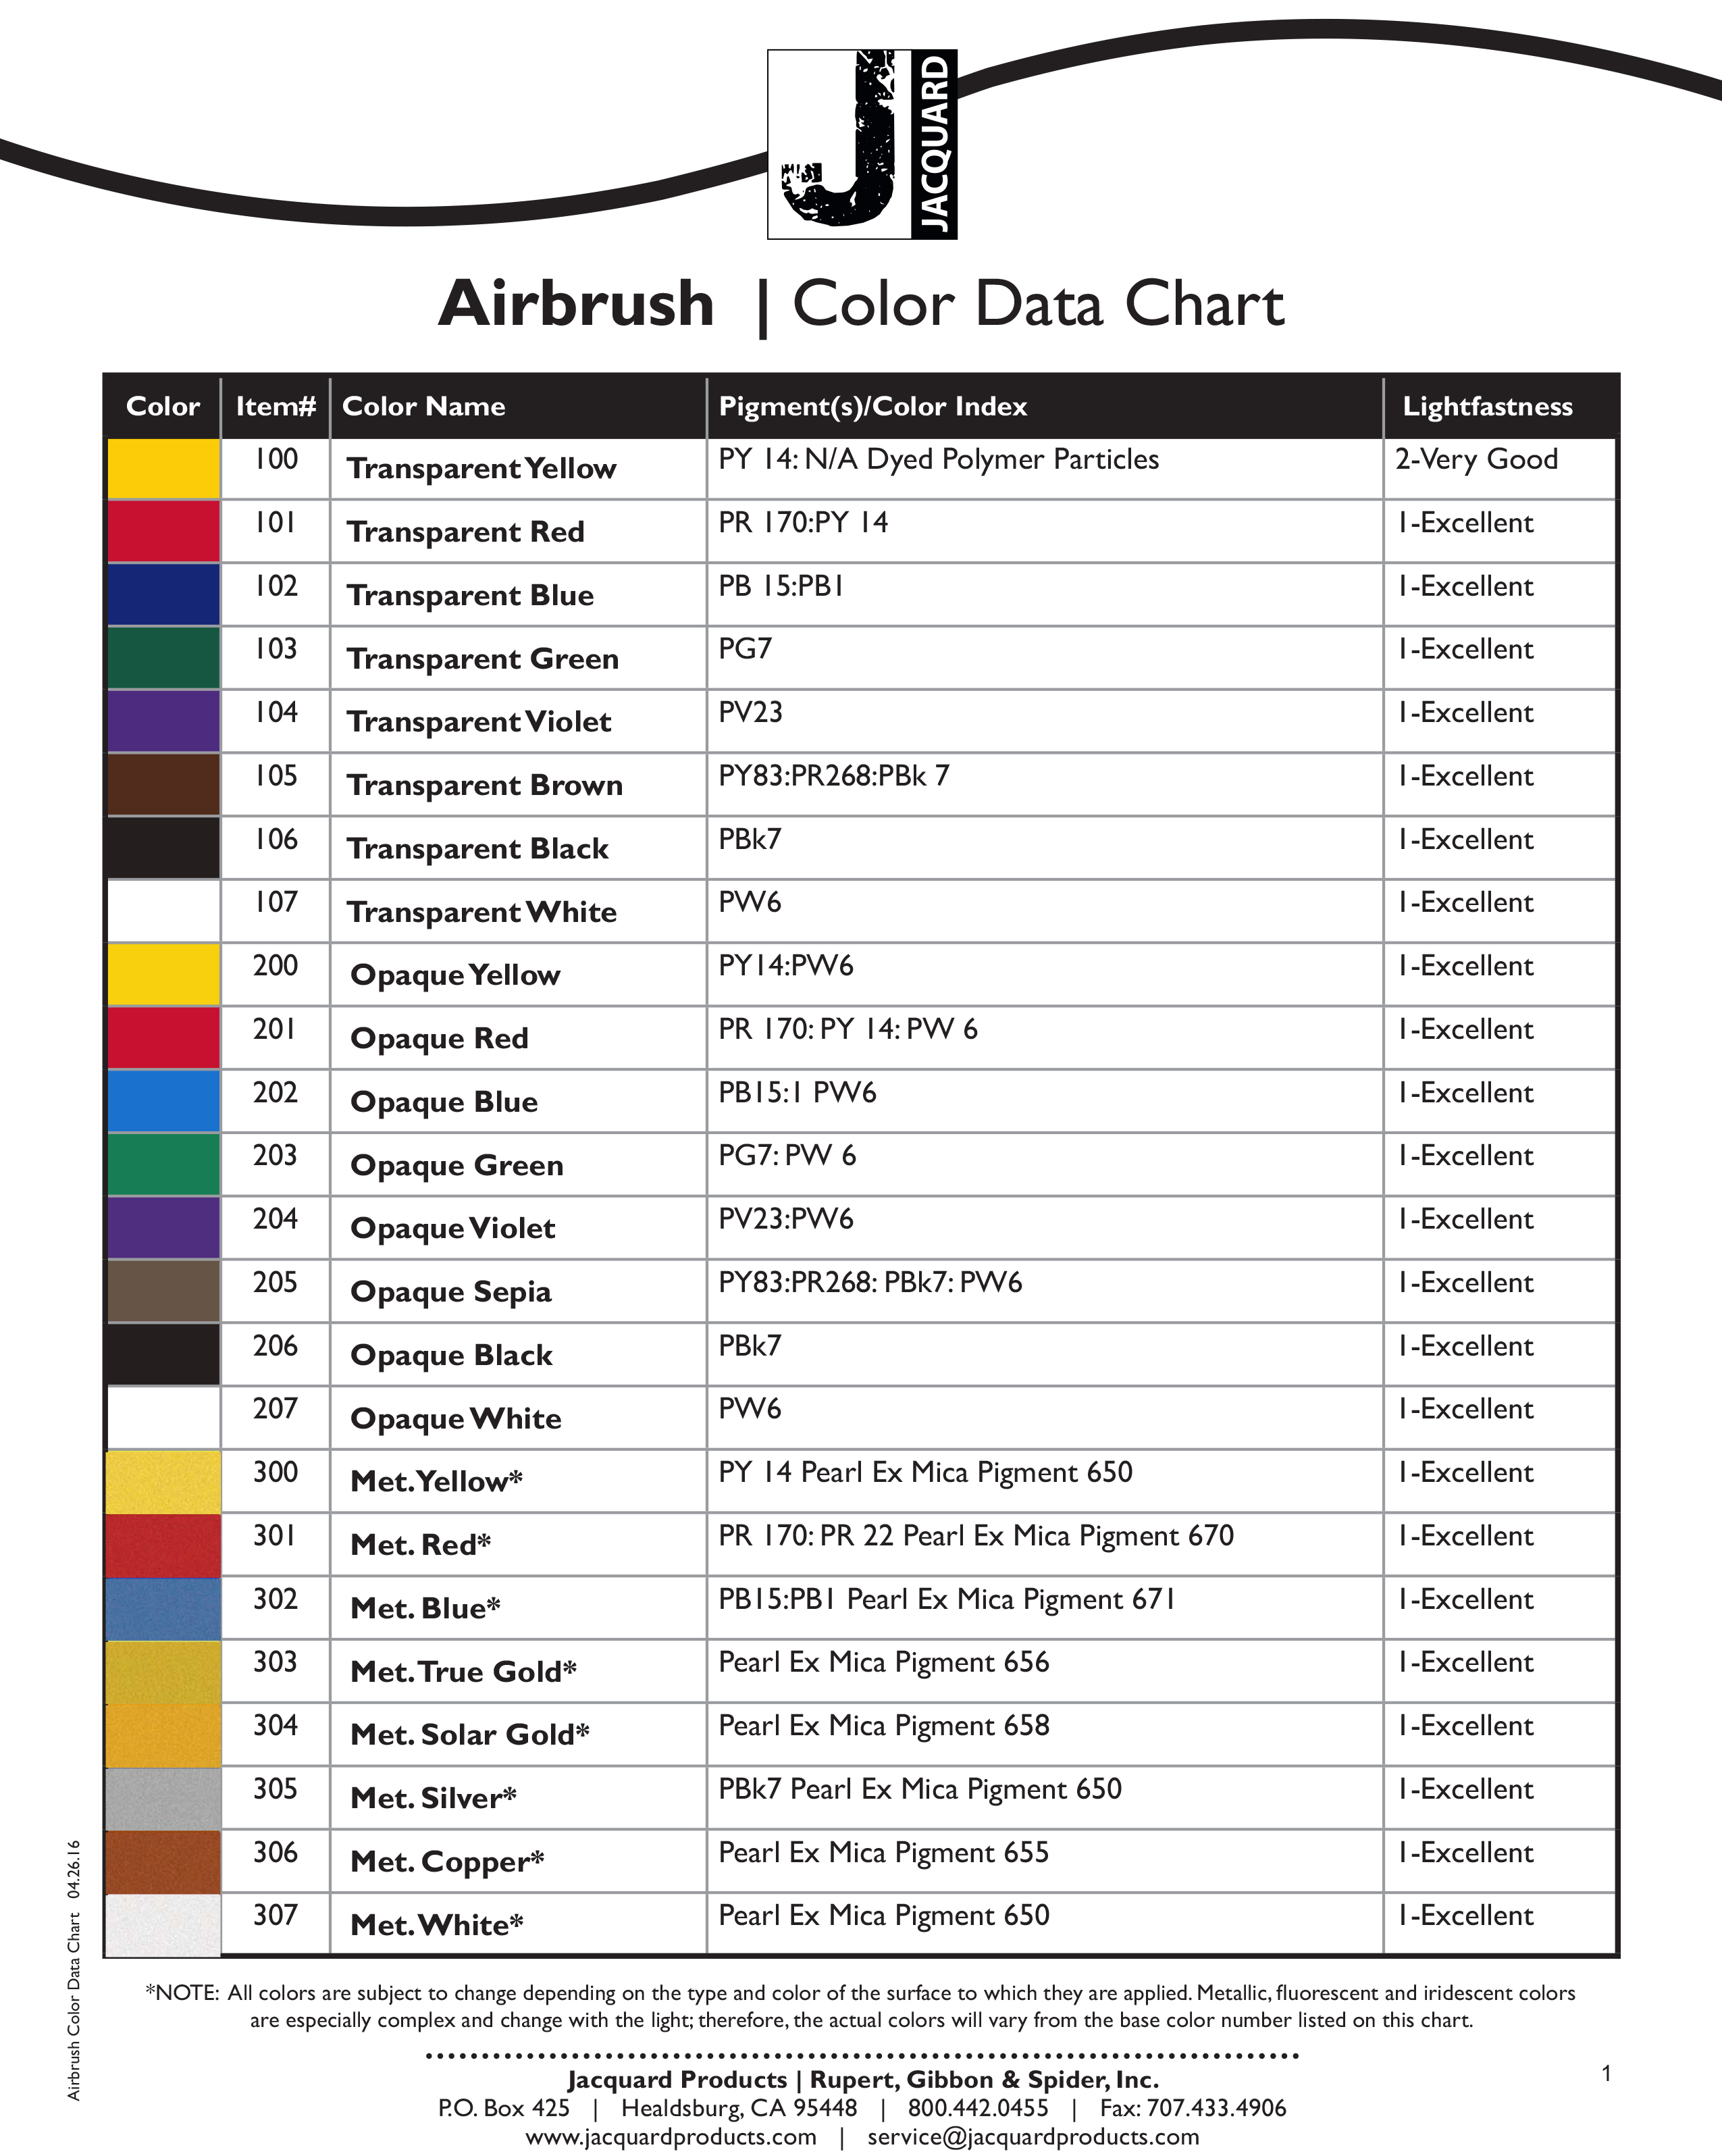 Airbrush-Color-Data-Chart-1.jpg